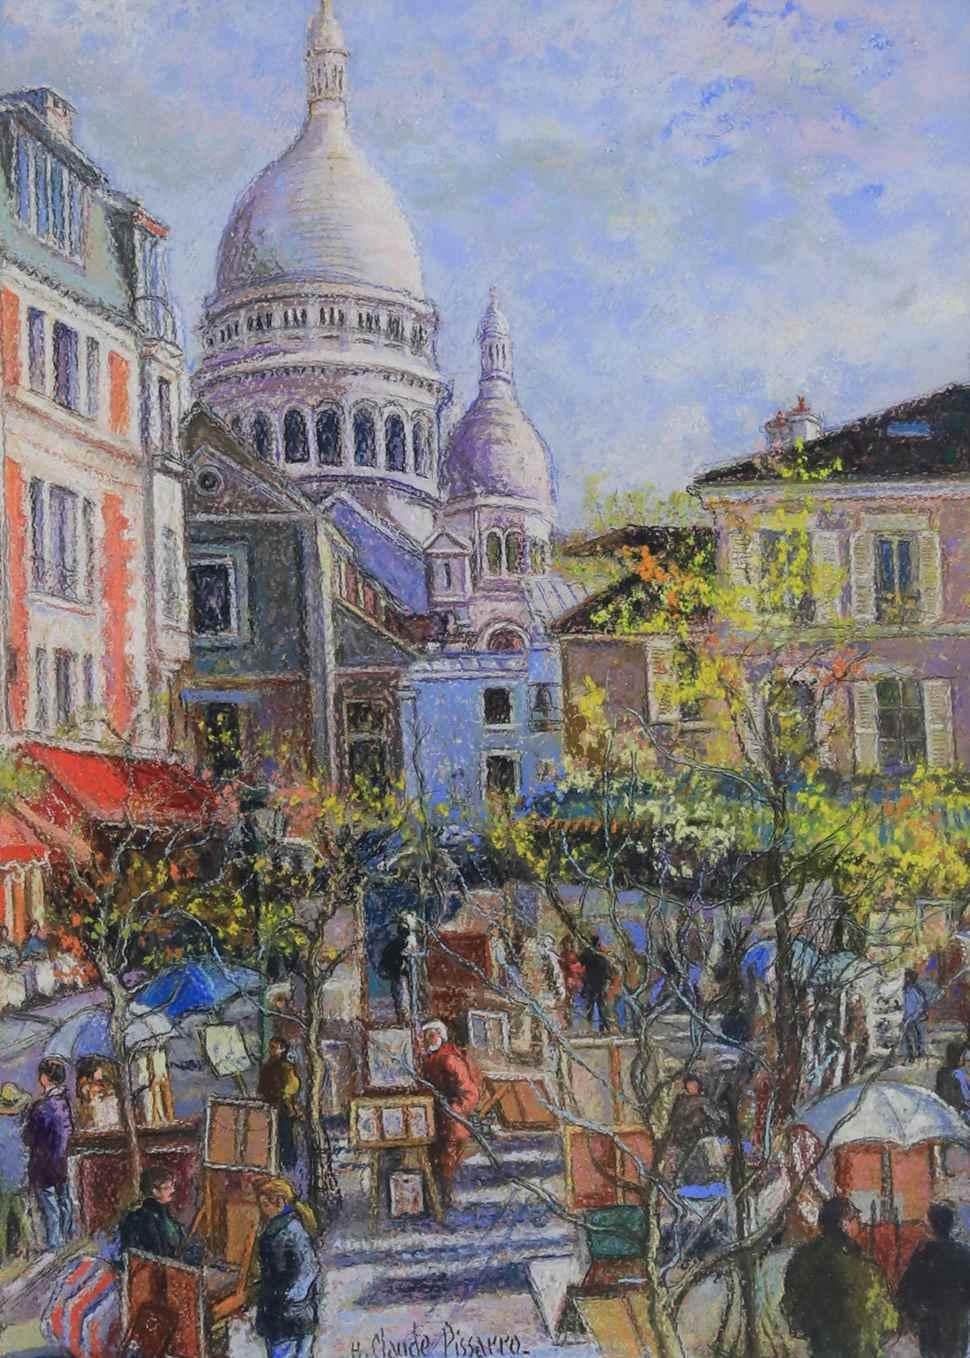 Hughes Claude Pissarro Figurative Art - Les Parasols Blancs - Montmartre by H. Claude Pissarro - Pastel on Card